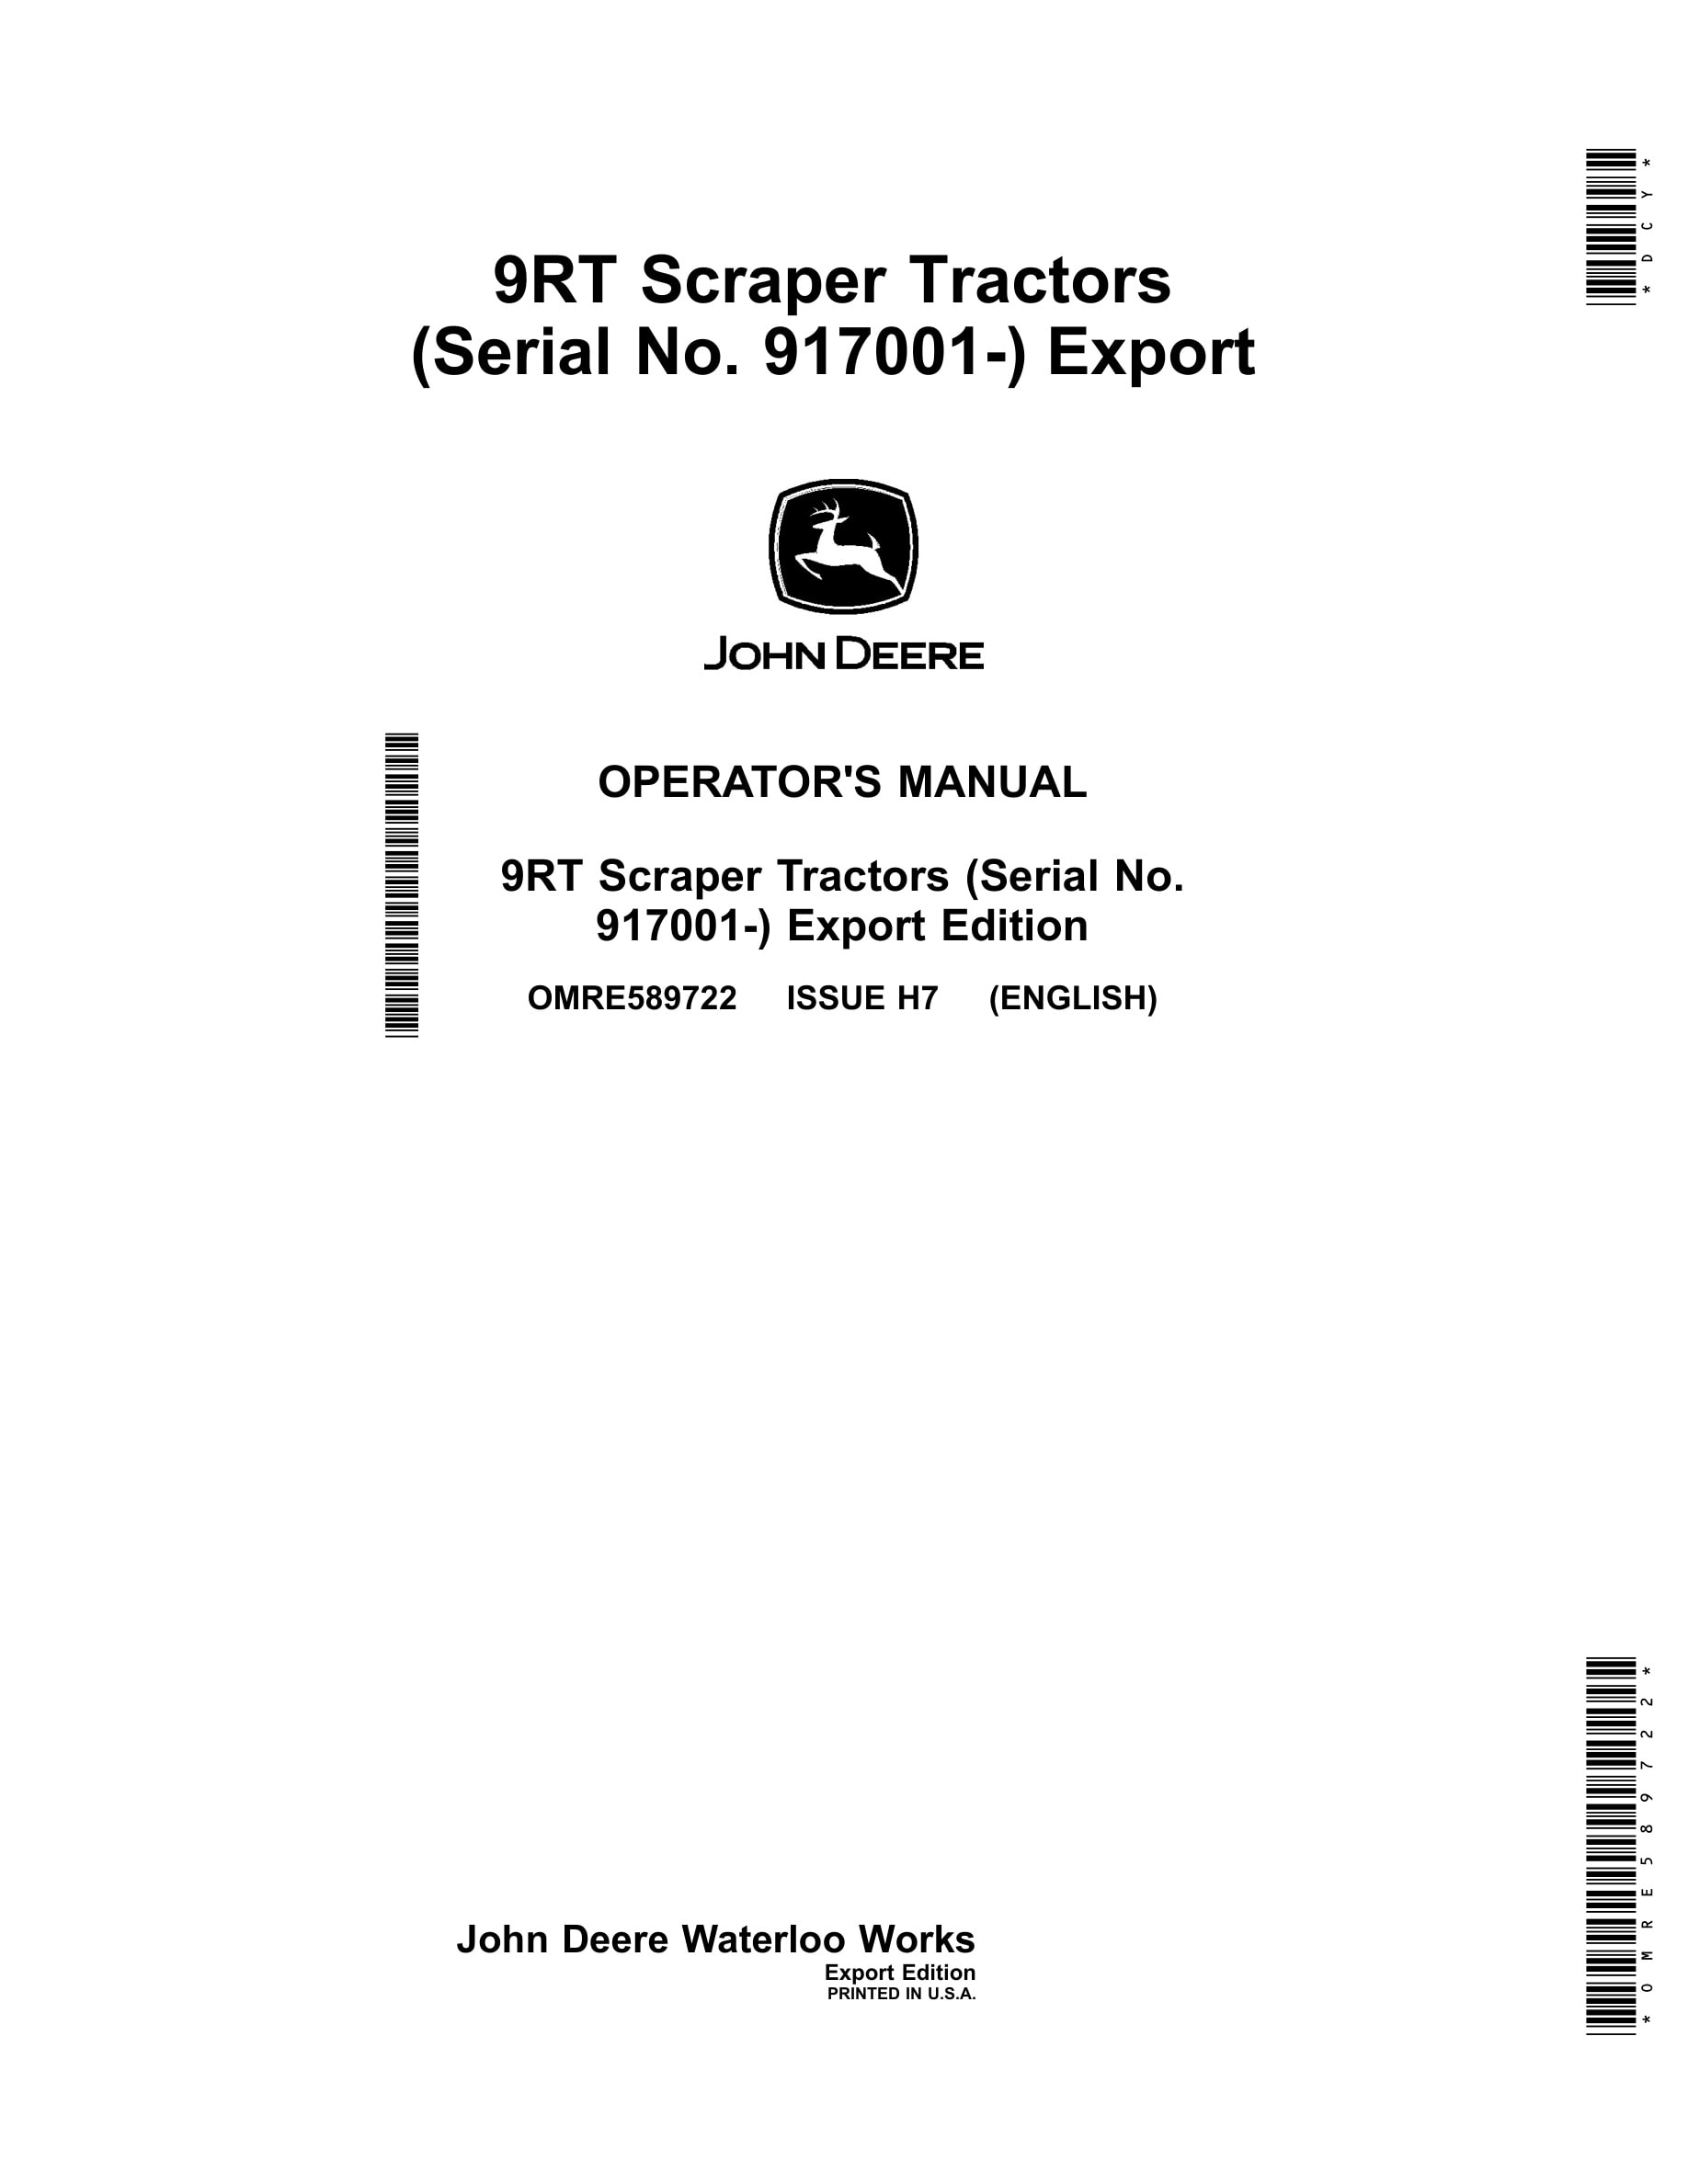 John Deere 9rt Scraper Tractors Operator Manuals OMRE589722-1